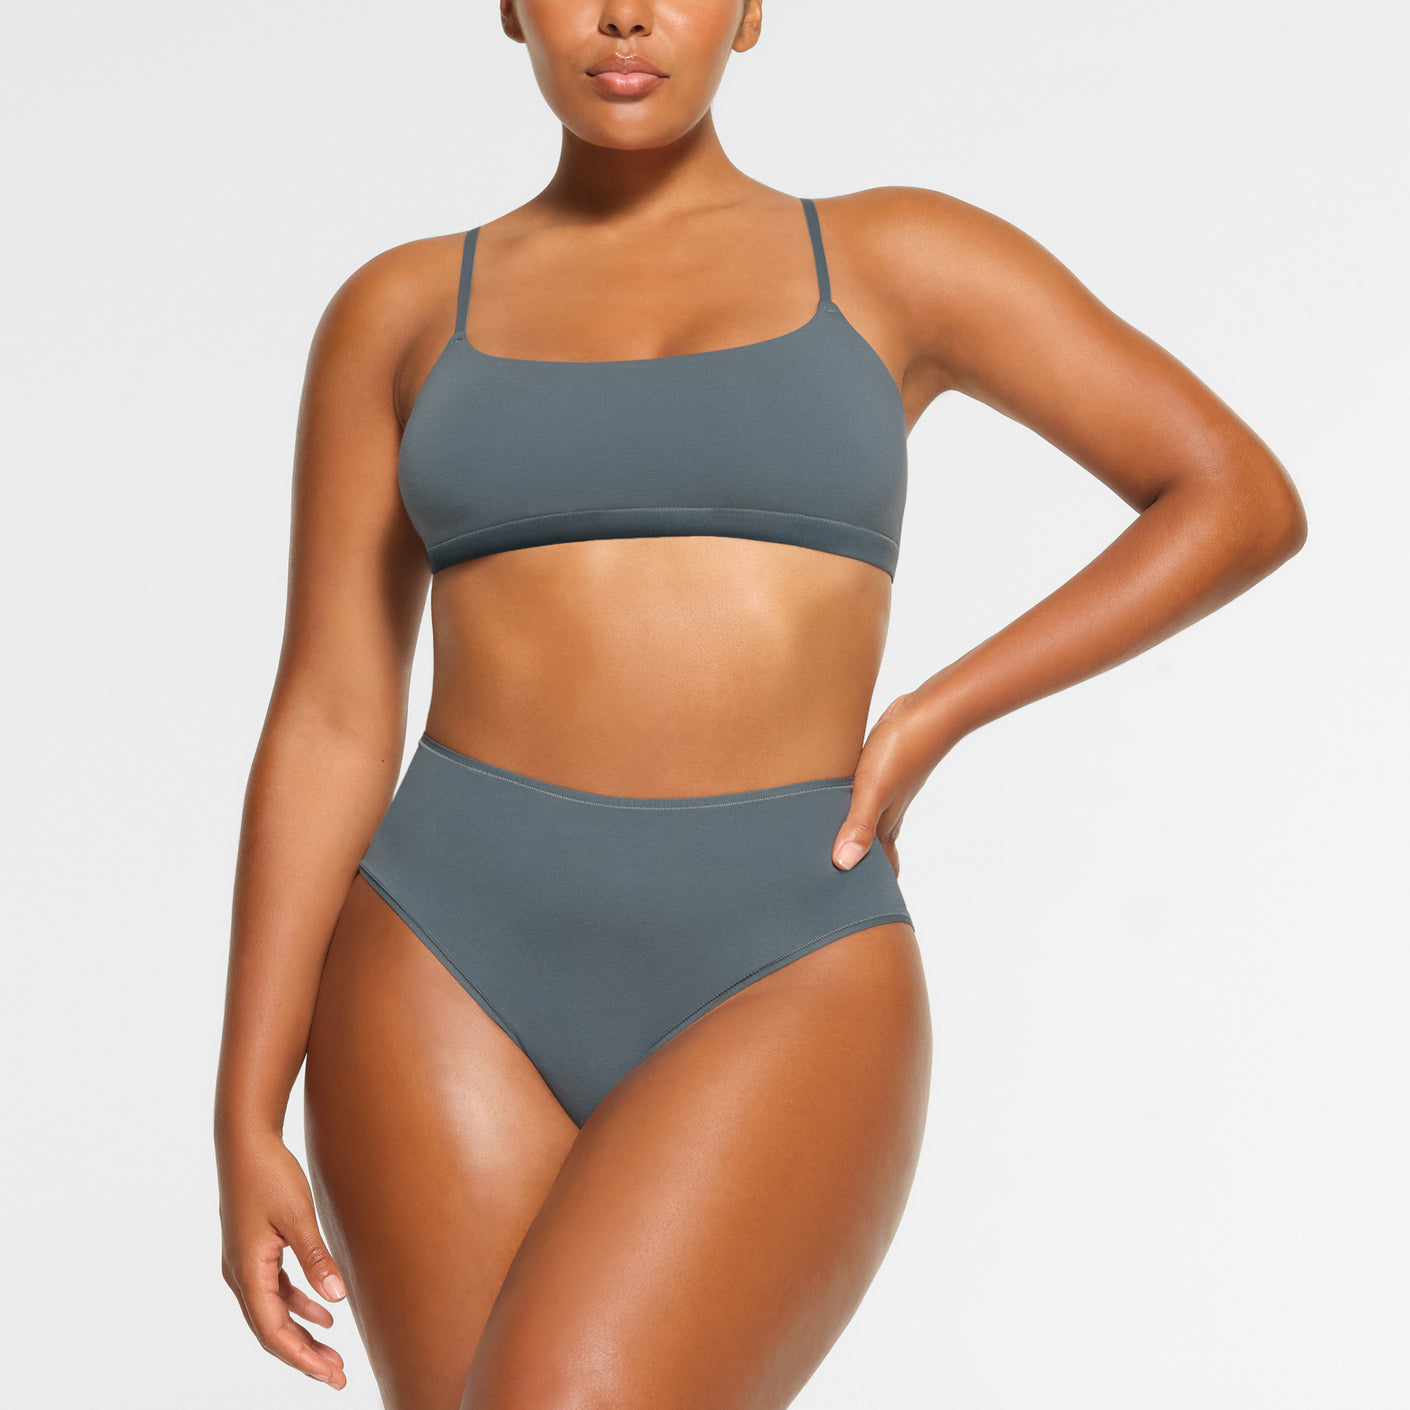 SKIMS 2 Piece Bikini Set Gray Size M - $90 New With Tags - From